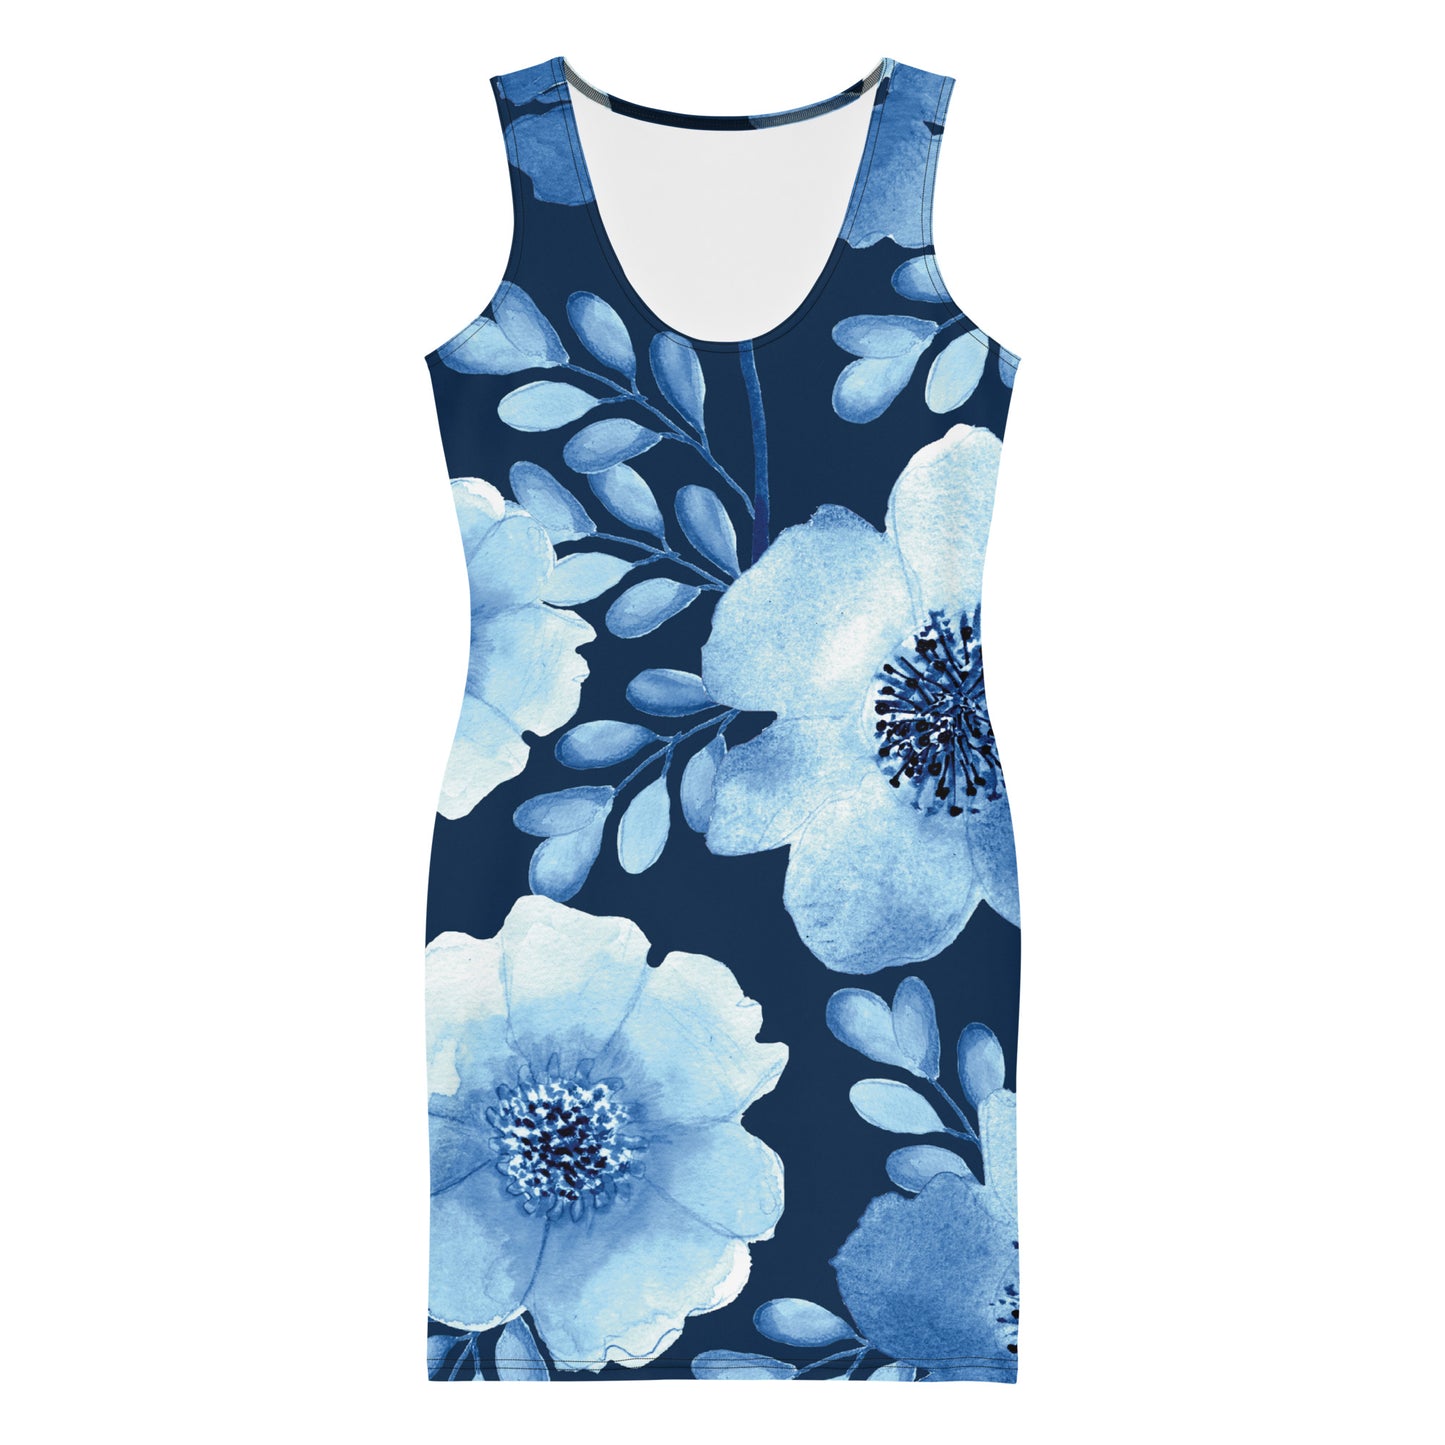 "Flower" patterned dress